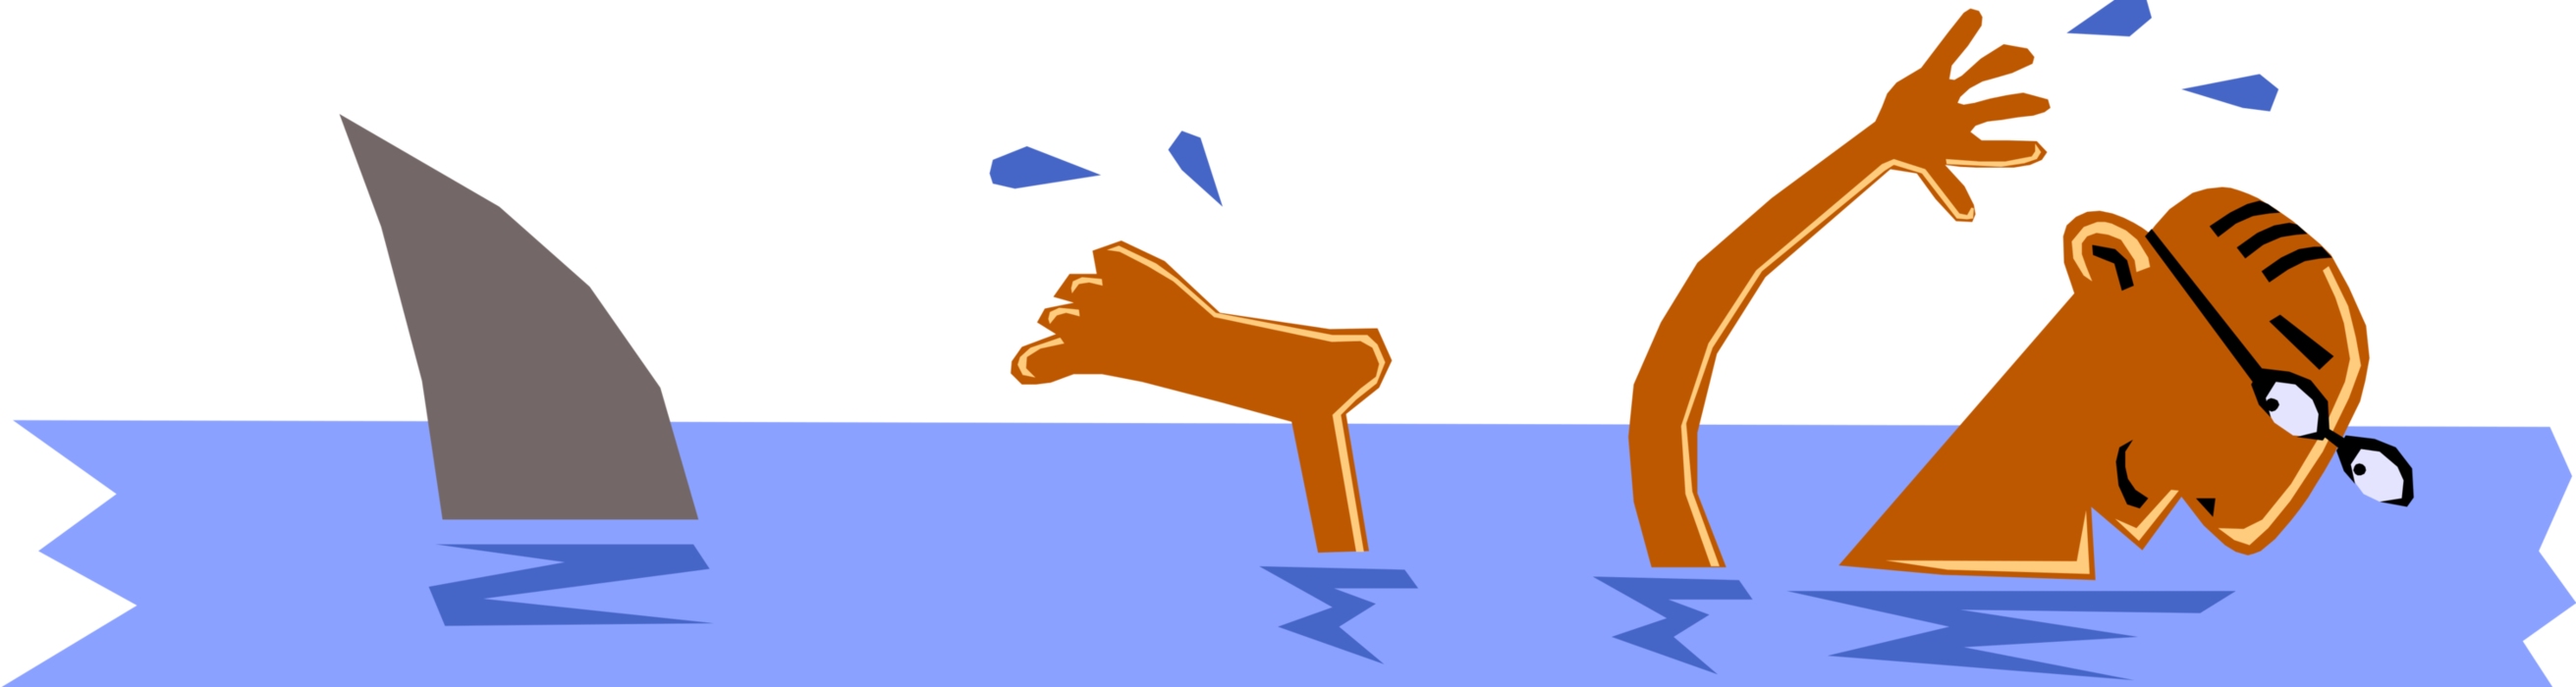 Vector Illustration of Swimmer Gets Chased by Marine Predator Shark